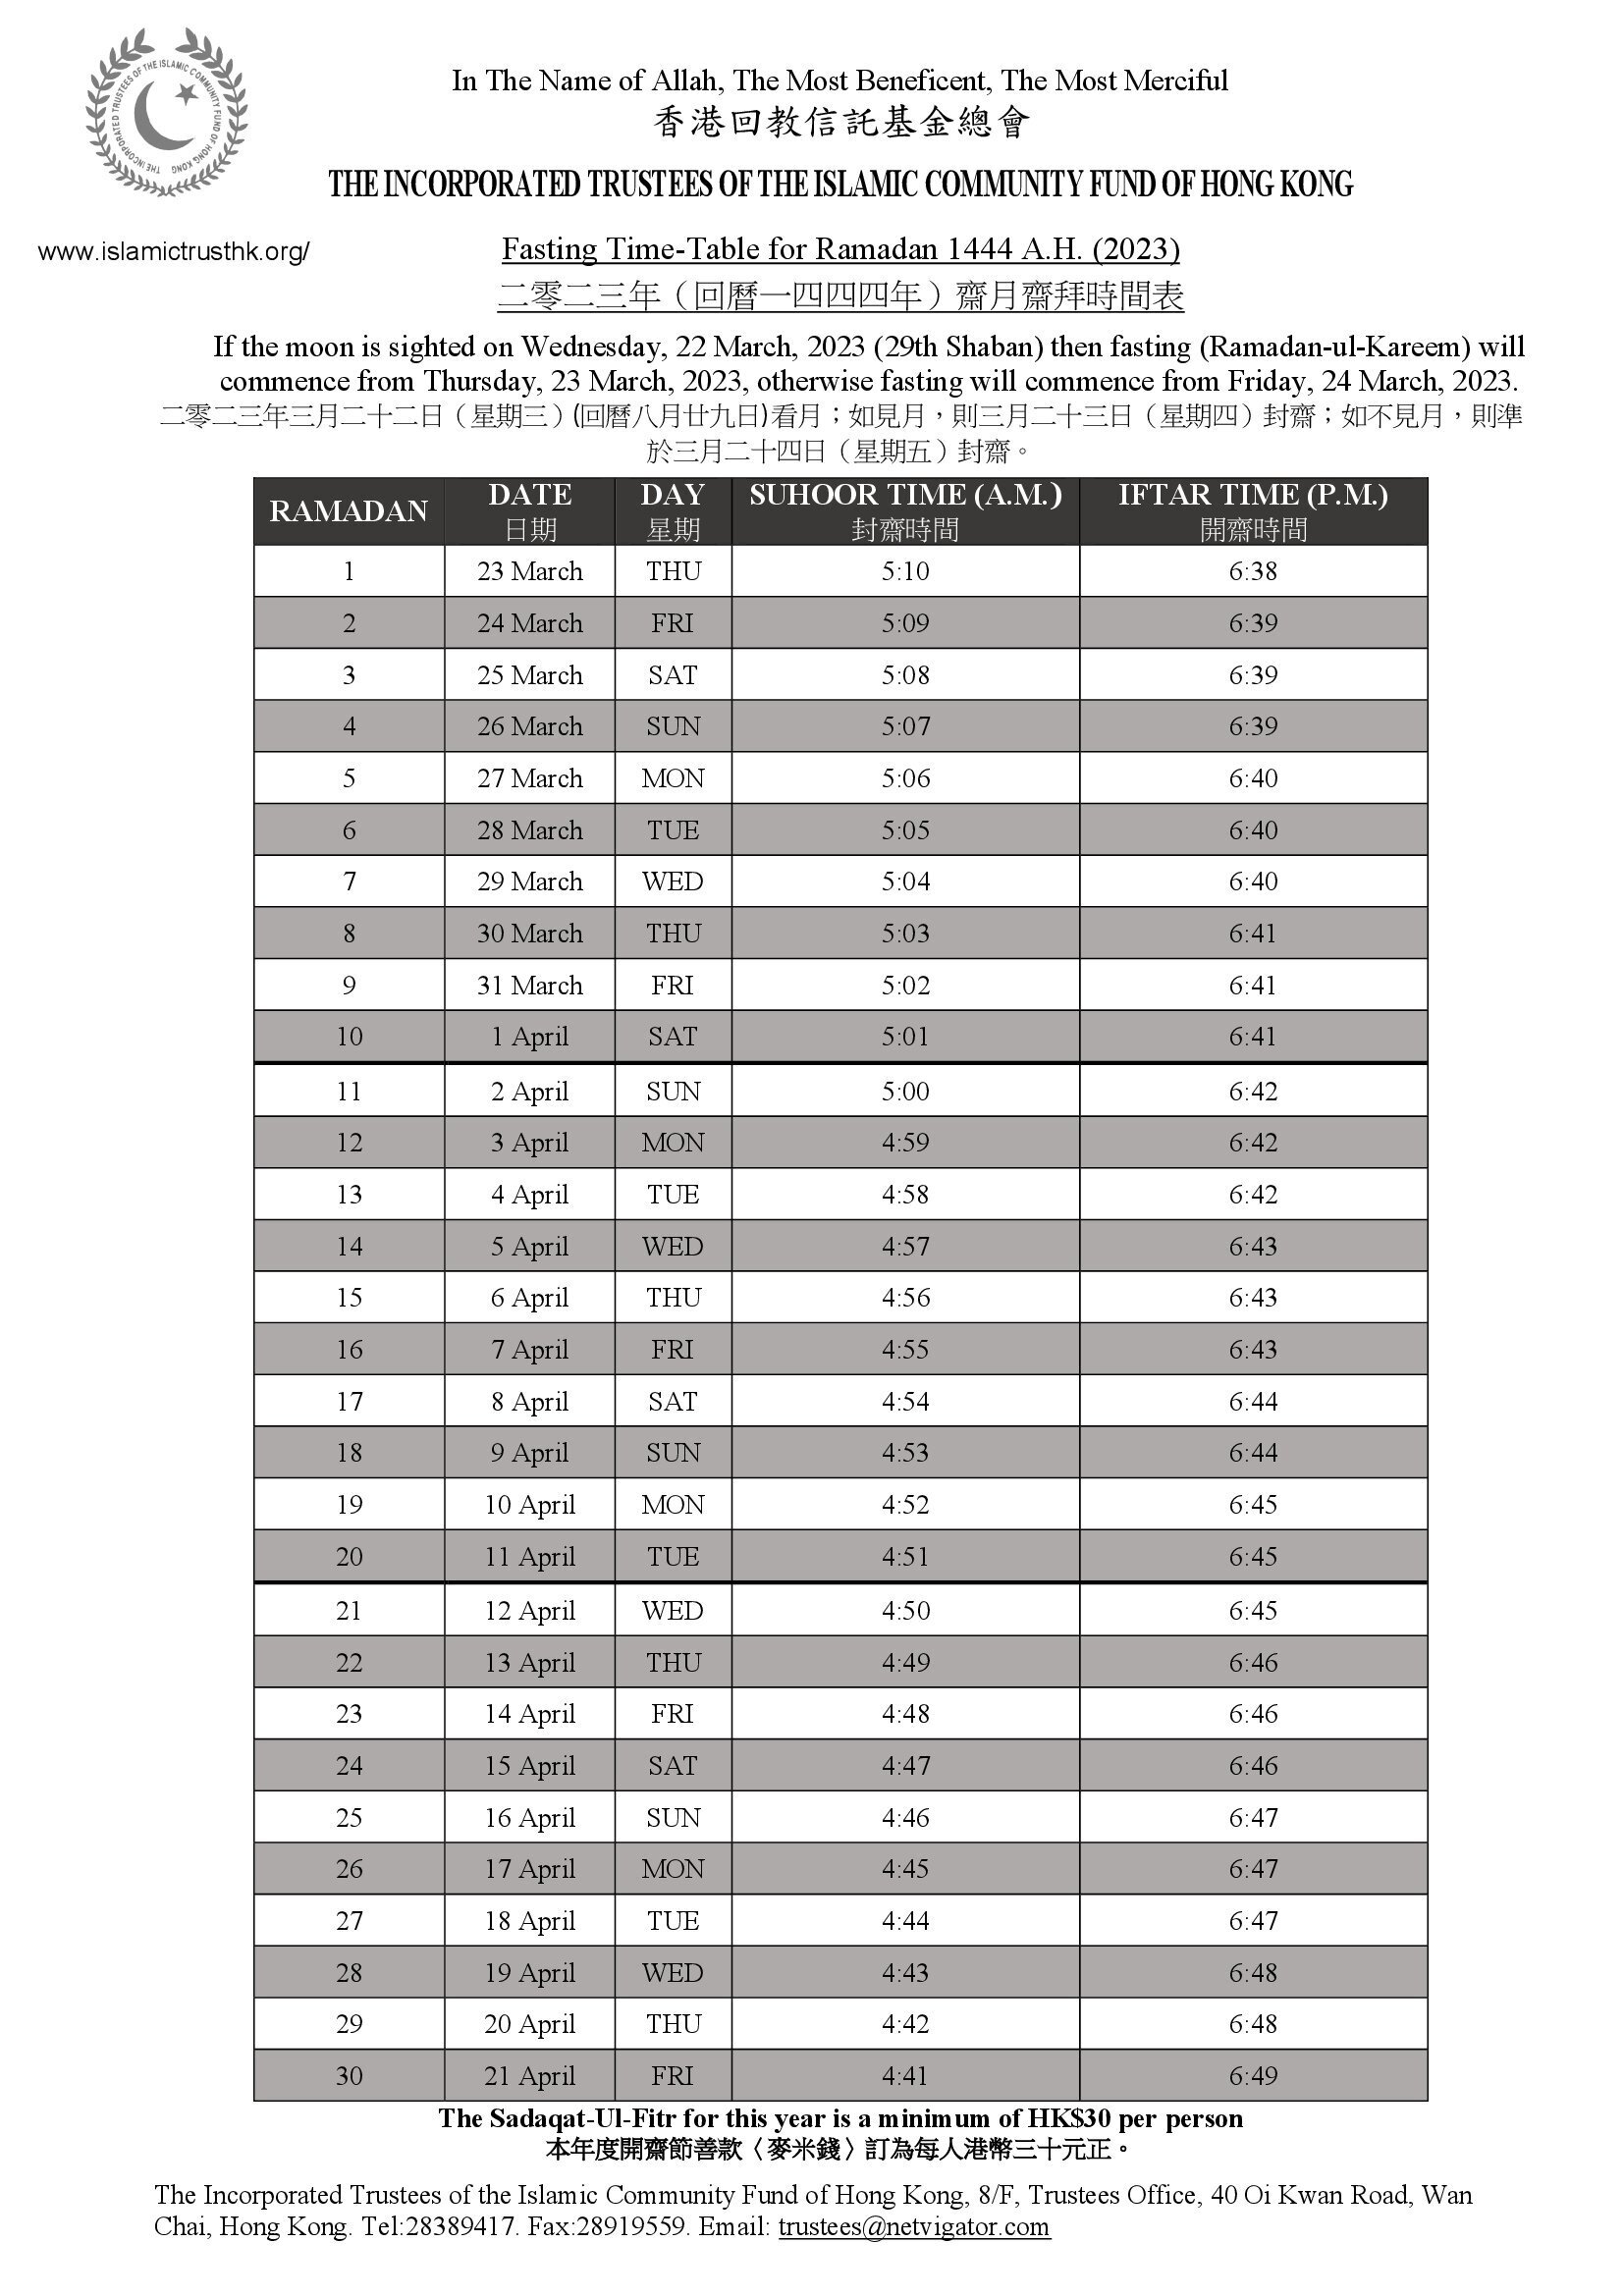 Ramadan Fasting and Taravih Timetable 2023